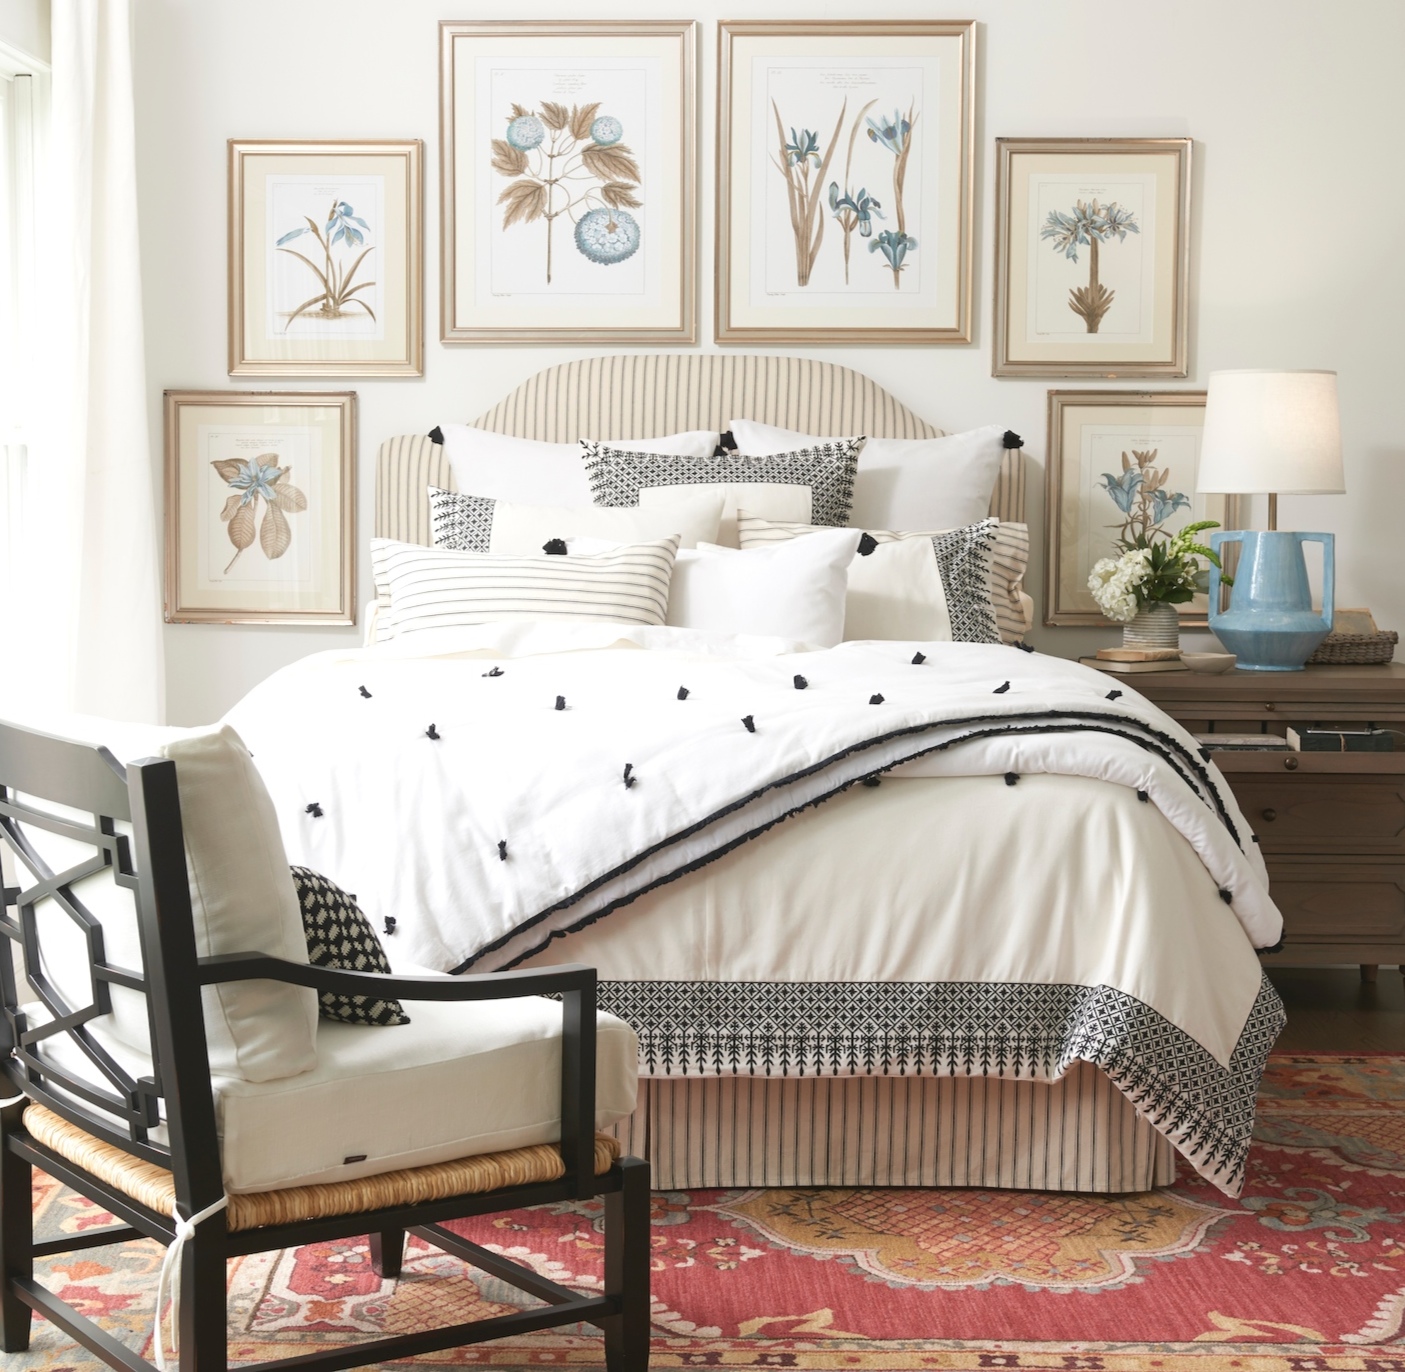  Ballard Designs - Bed Styling 